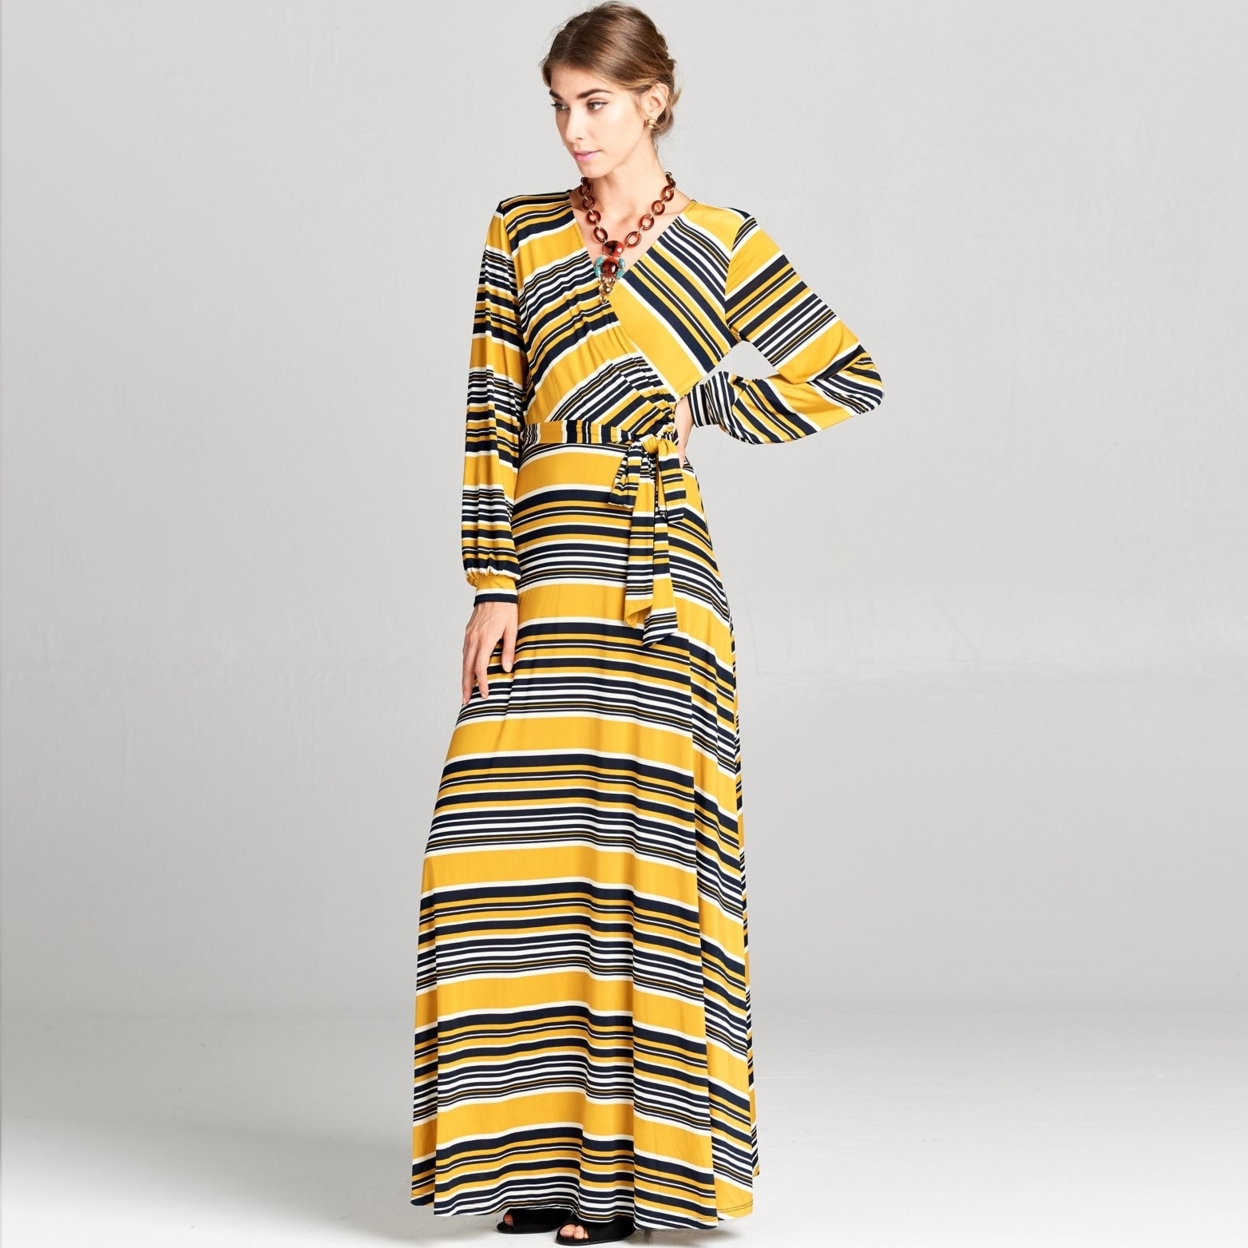 Cuffed Sleeve Venechia Stripe Dress - Mustard/navy, Medium (8-10)